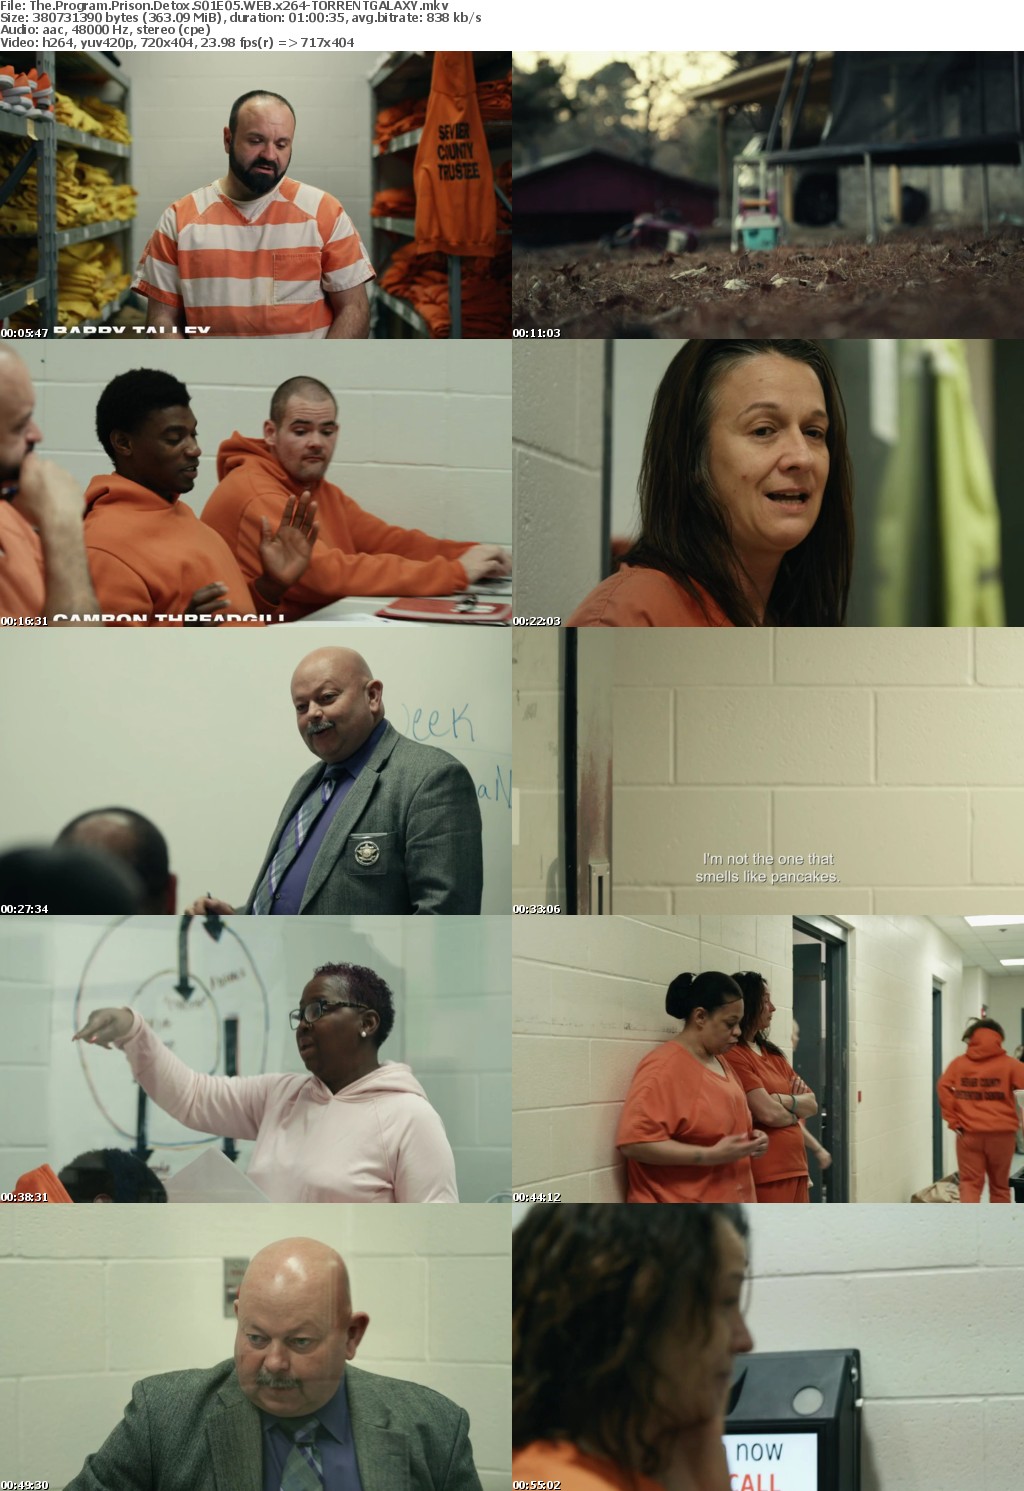 The Program Prison Detox S01E05 WEB x264-GALAXY